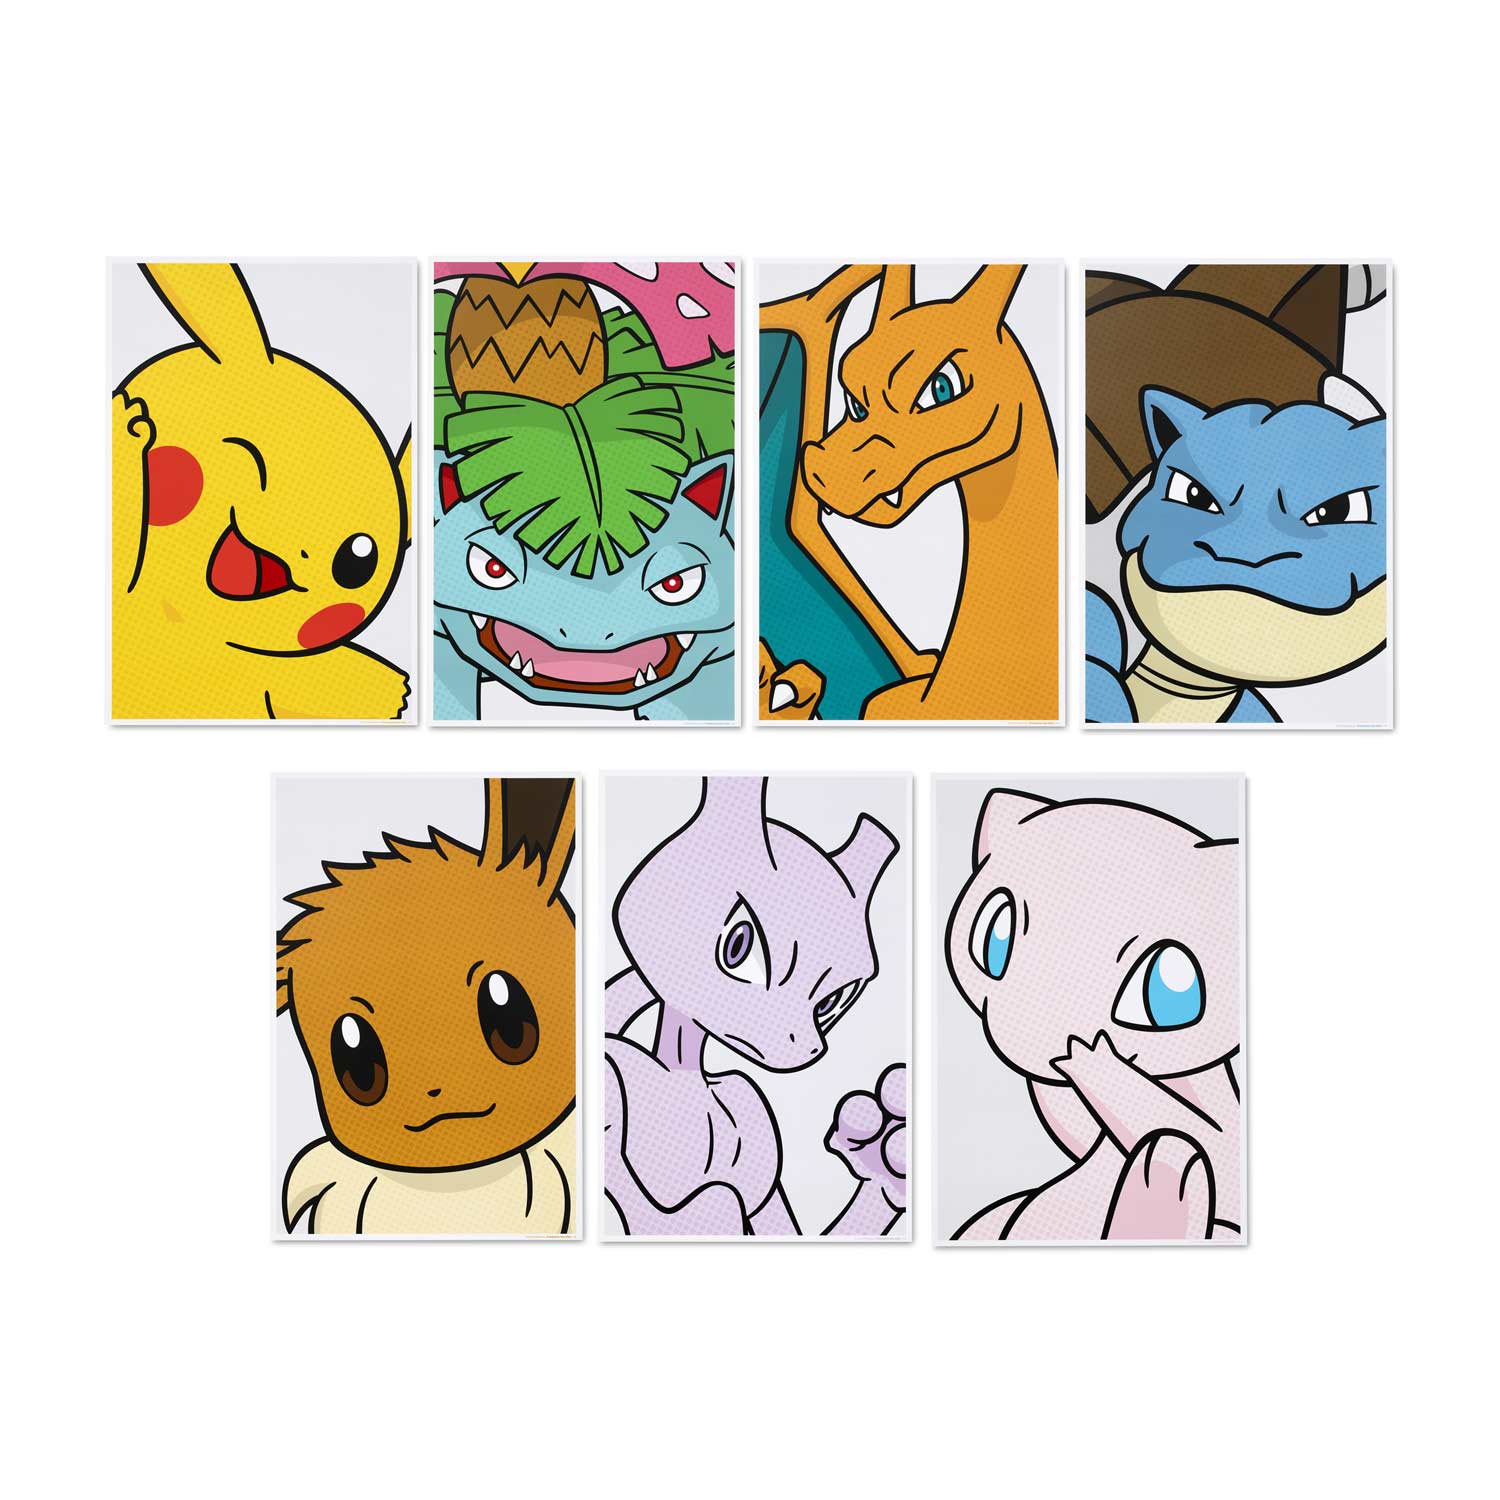 New Pokémon Friends Posters Venusaur Charizard Blastoise